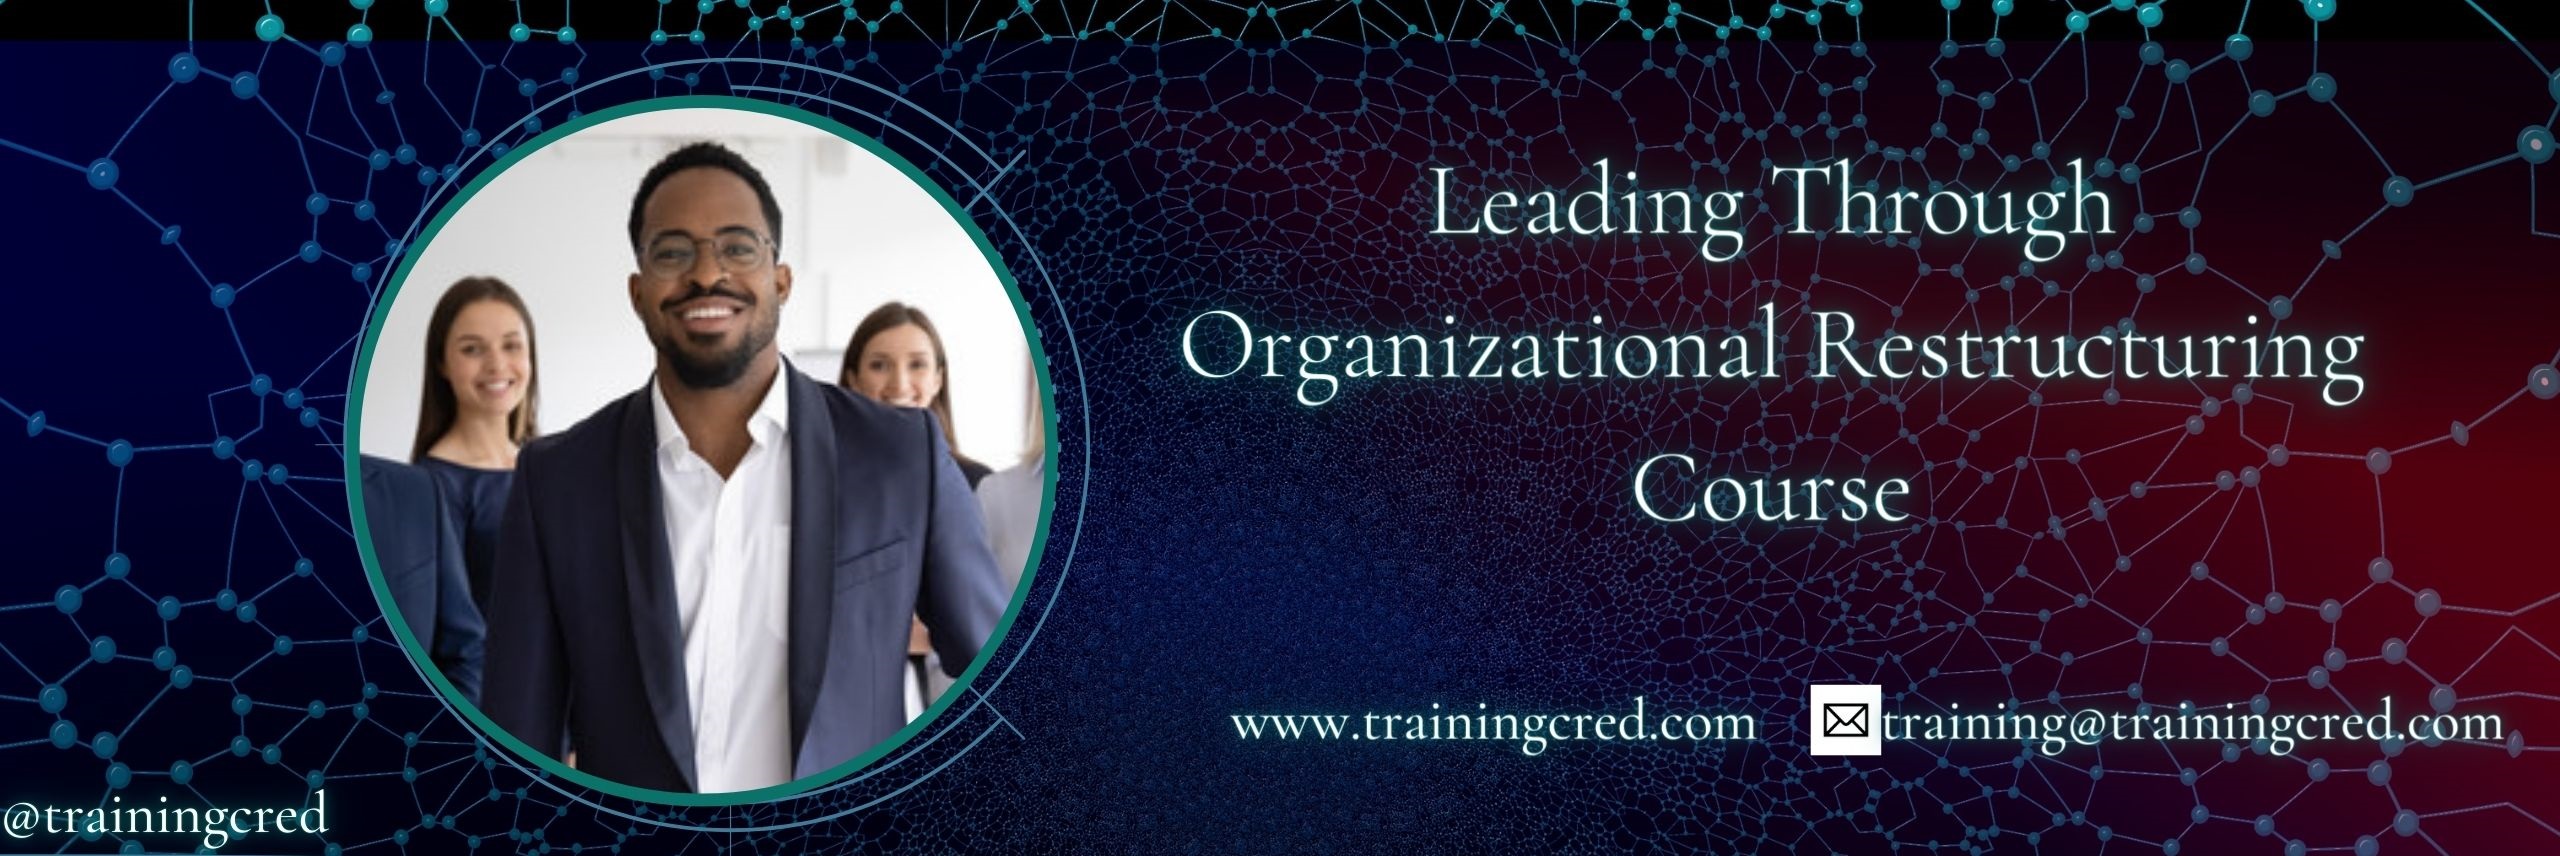 Leading Through Organizational Restructuring Training